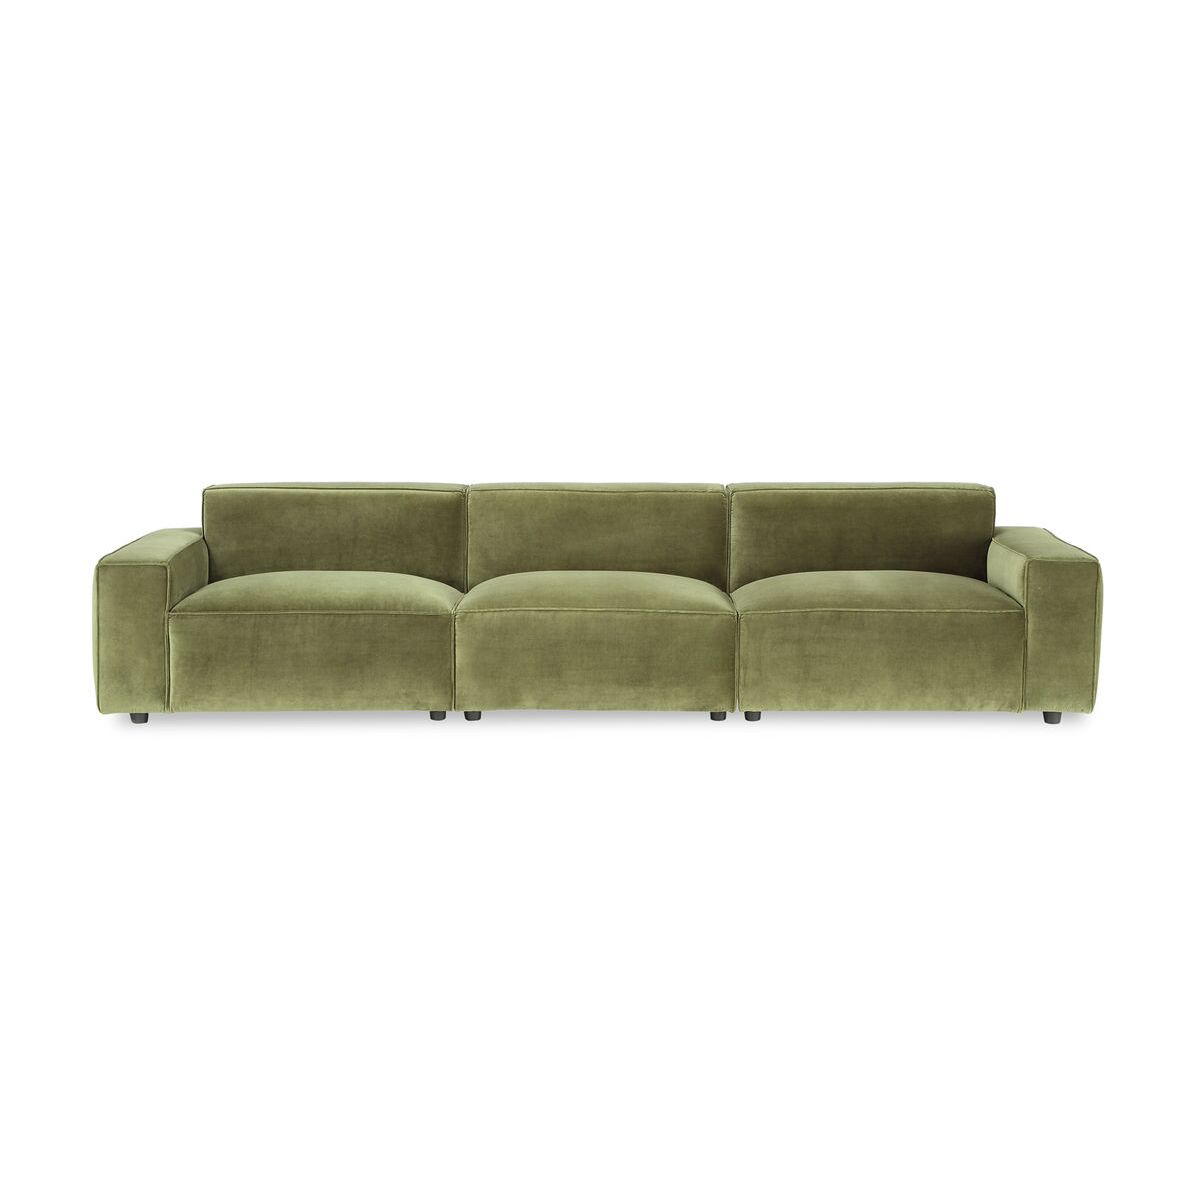 A.R.T. Furniture Bobby Berk Upholstered Olafur 3 Piece Modular Sofa